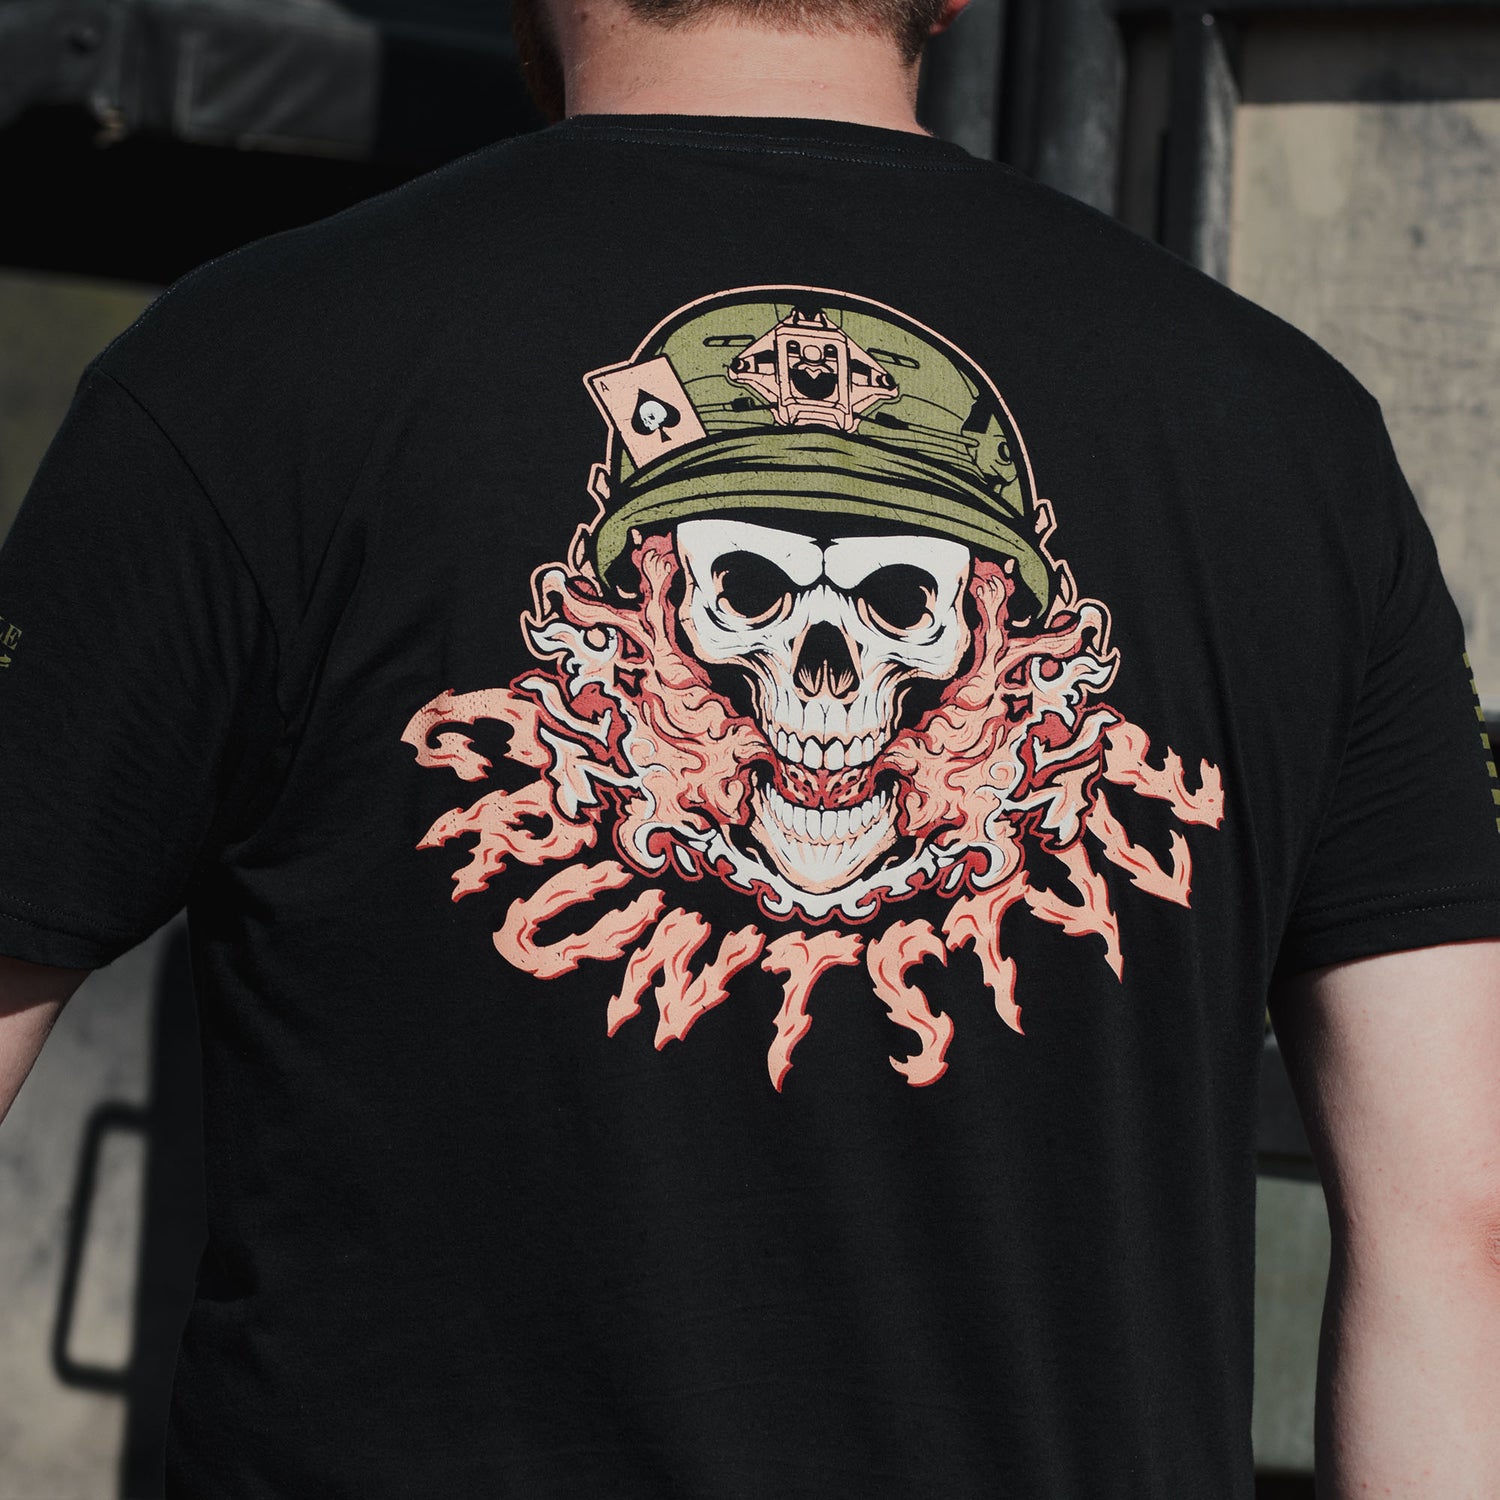 Military Shirts - Patriotic Clothing 